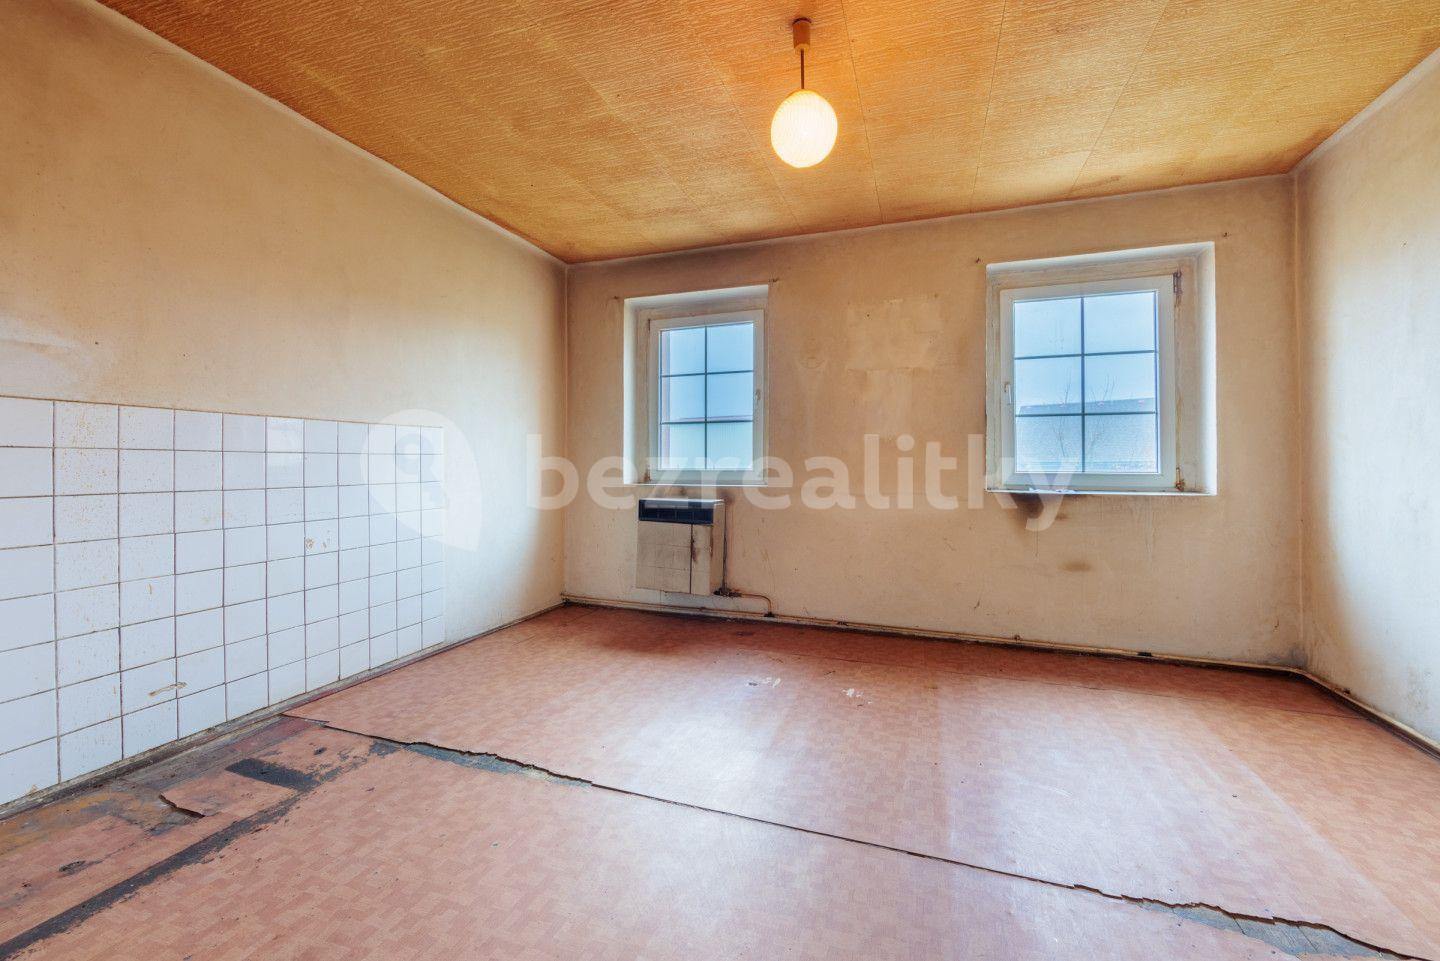 2 bedroom flat for sale, 65 m², Hornická, Lomnice, Karlovarský Region